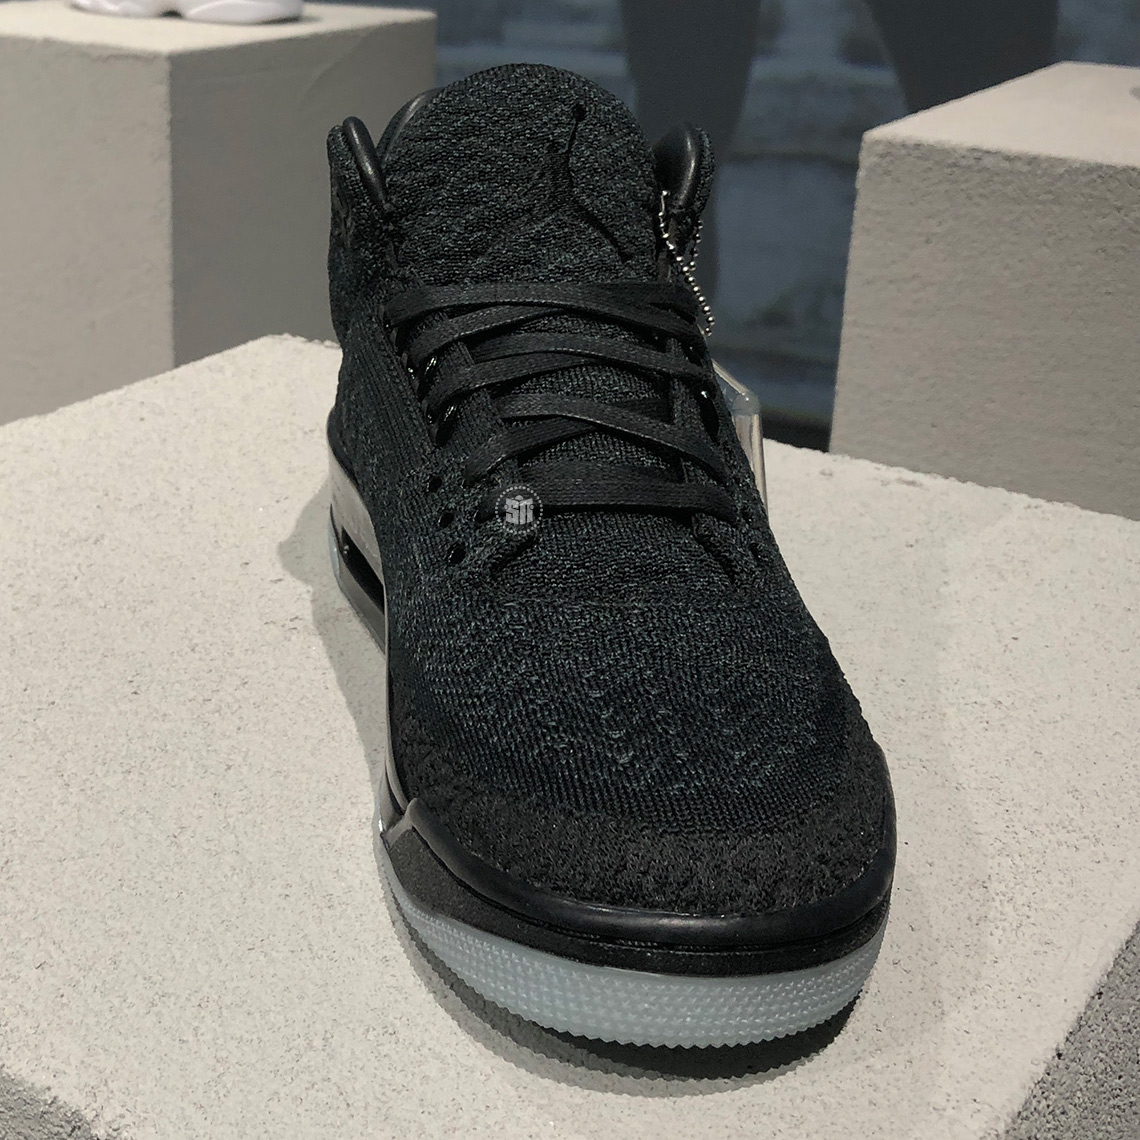 Air Jordan 3 Flyknit - First Look SneakerNews.com